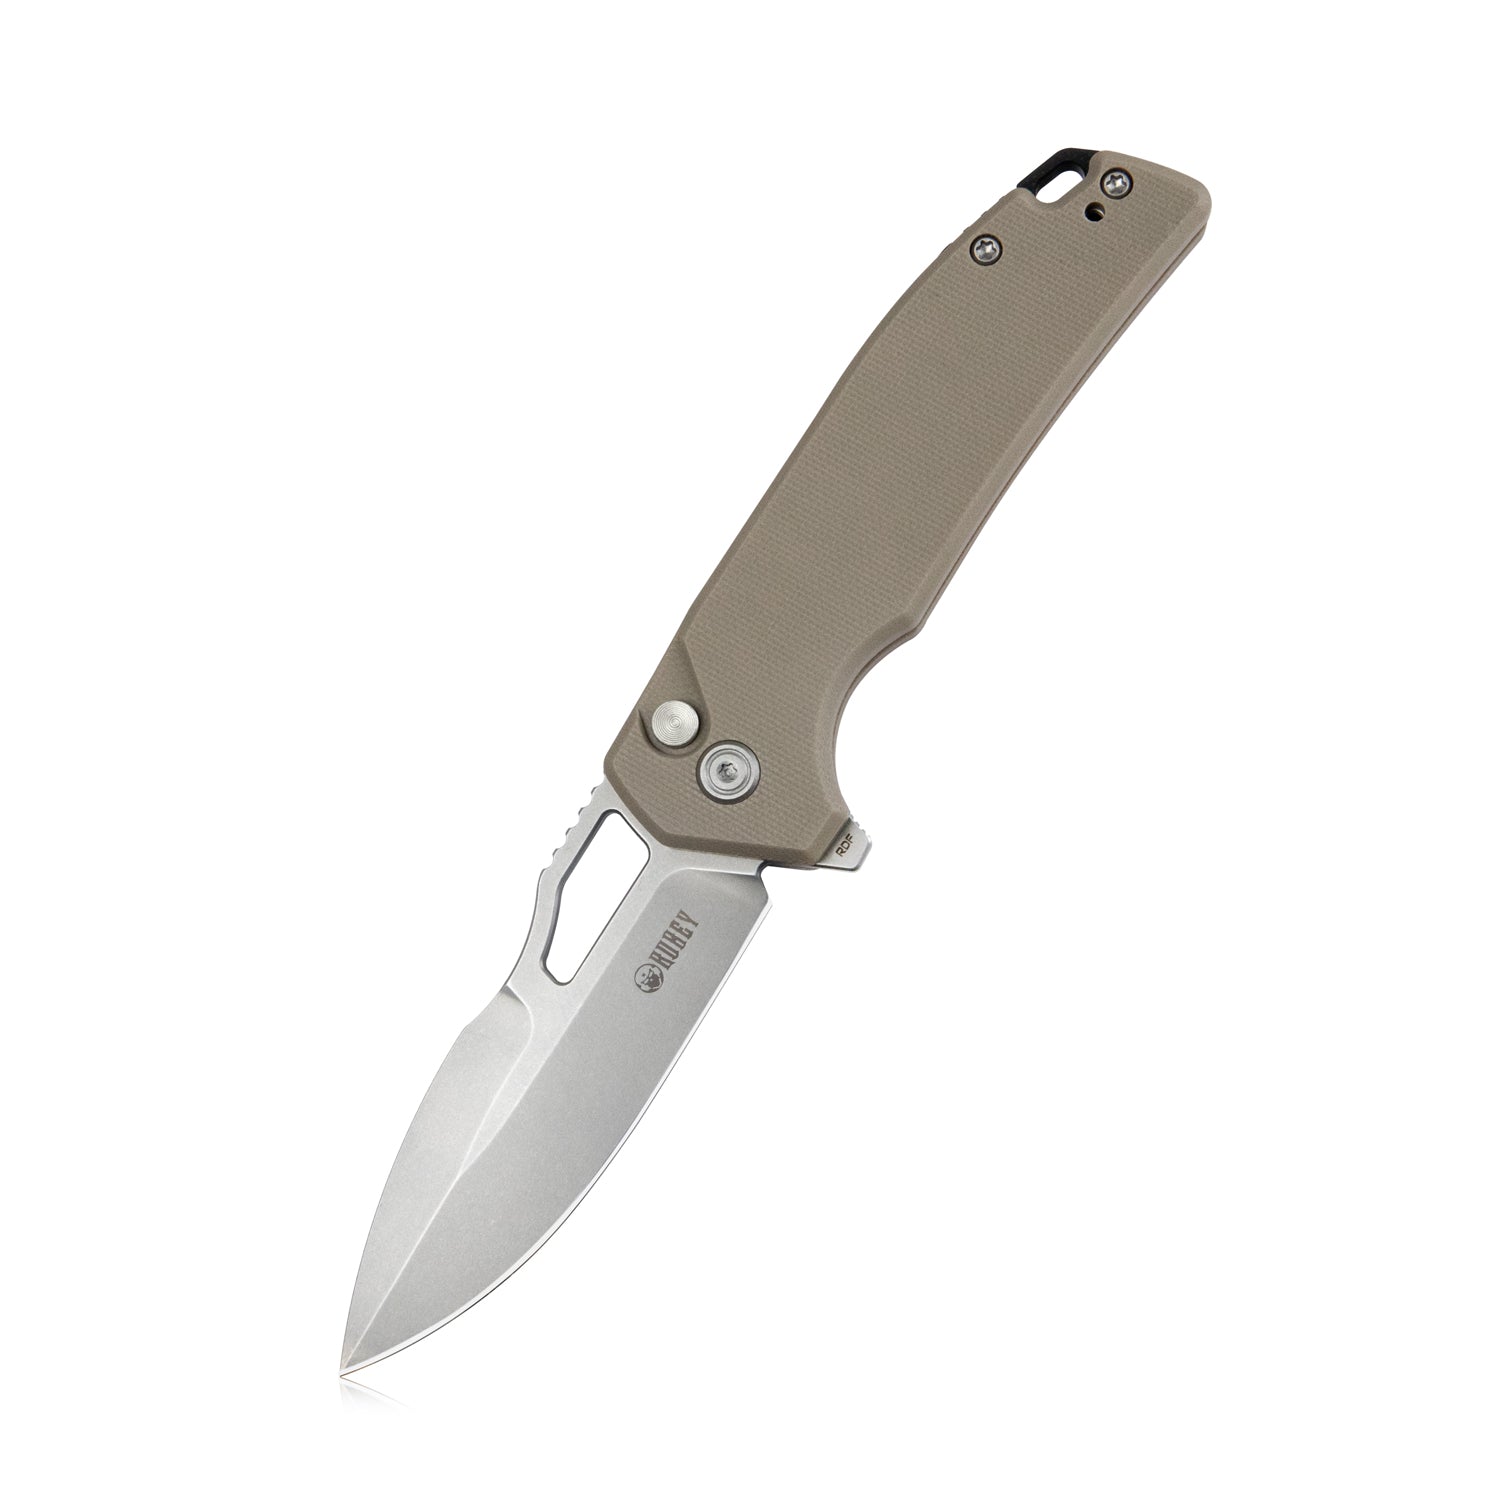 Kubey RDF Pocket Knife with Button Lock, Full-Contoured Tan G-10 Handle 3.11" Bead Blasted AUS-10 Blade, Lightweight Hydra Designed Folding Knife for EDC KU316D